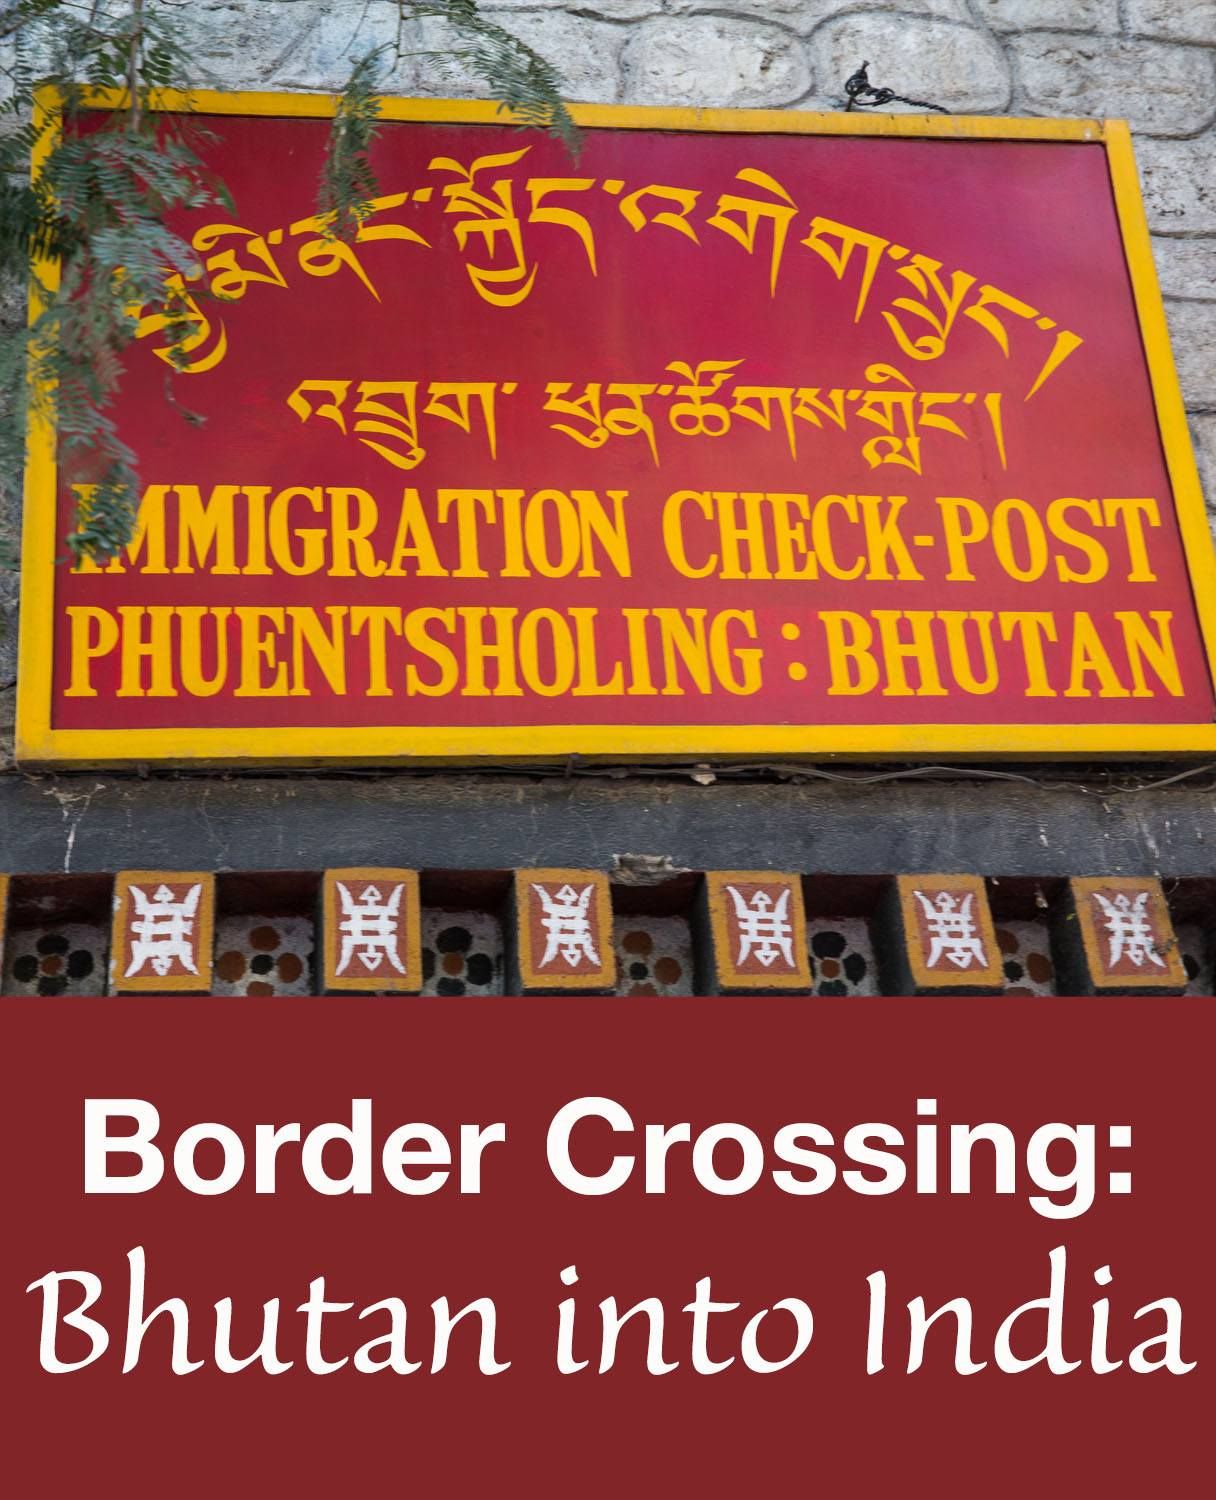 Bhutan into India